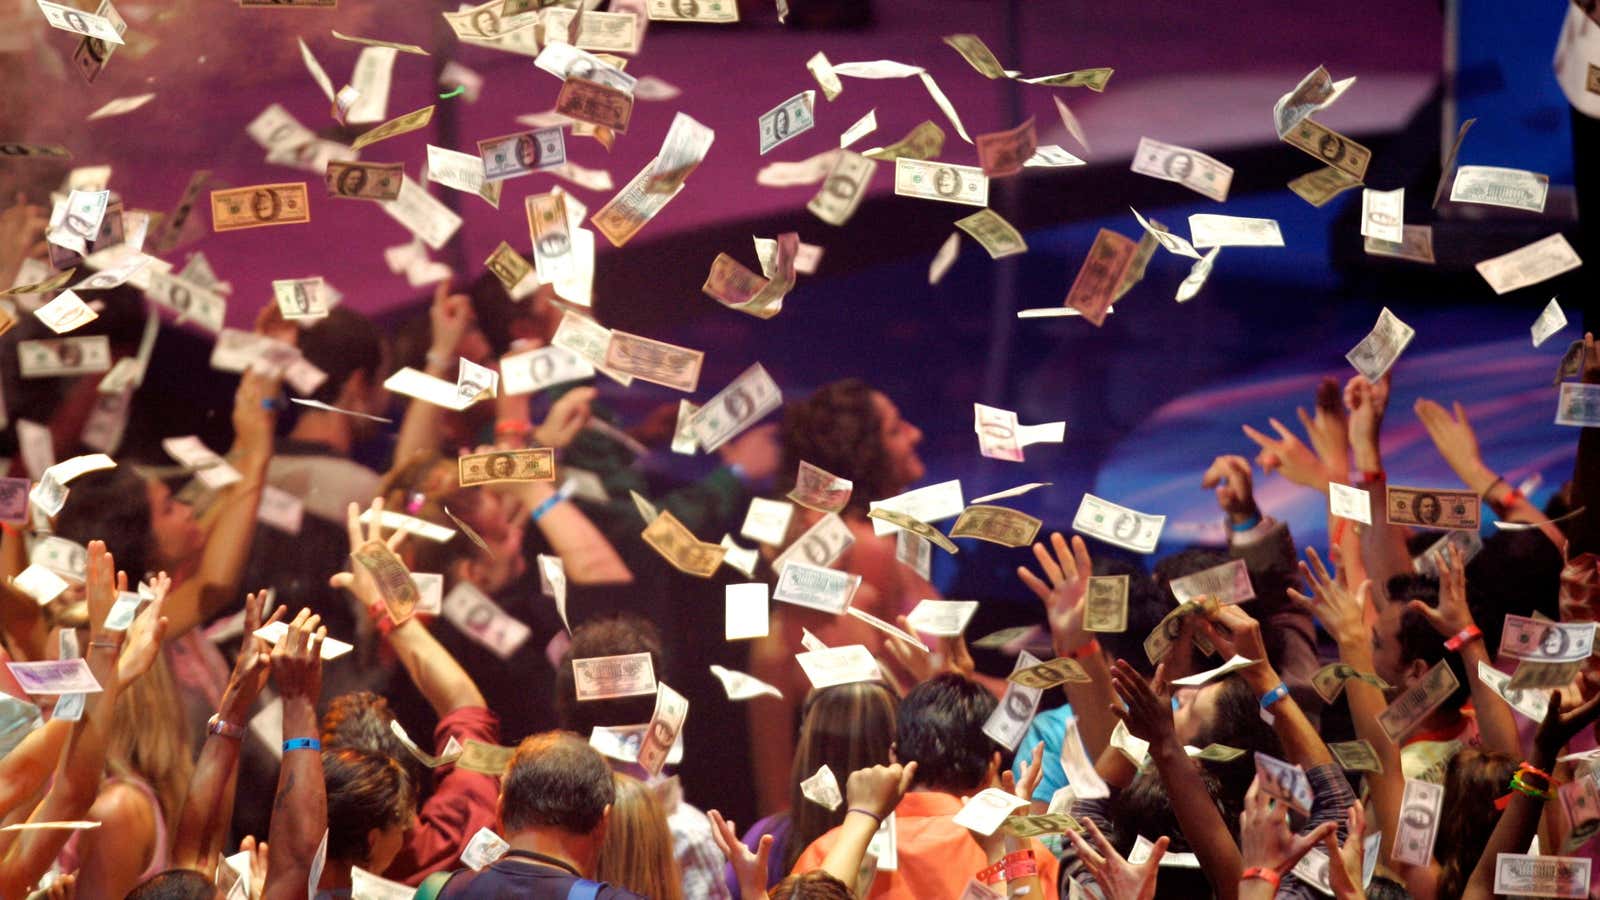 At a Kanye West concert, the cash flow is positive.